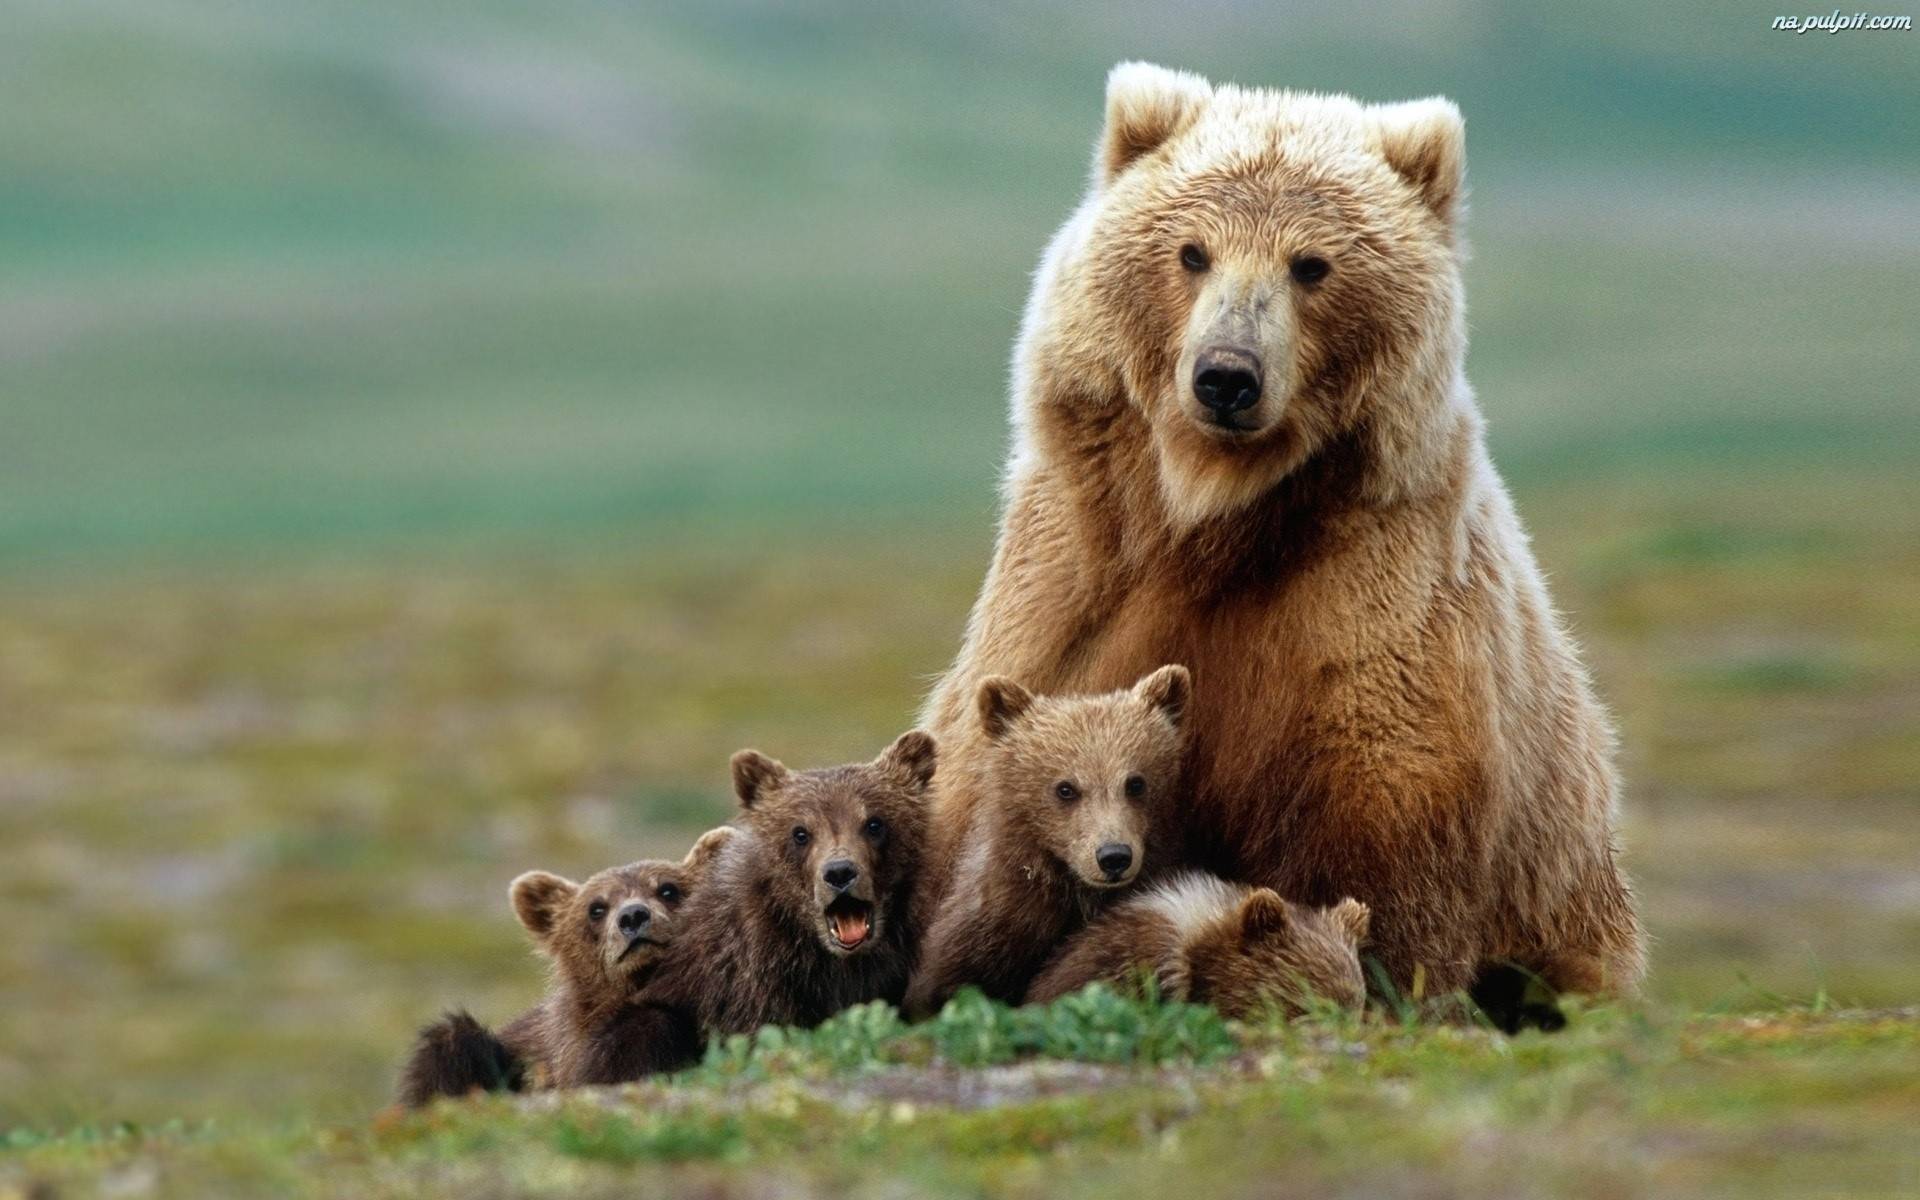 Mother bear photo